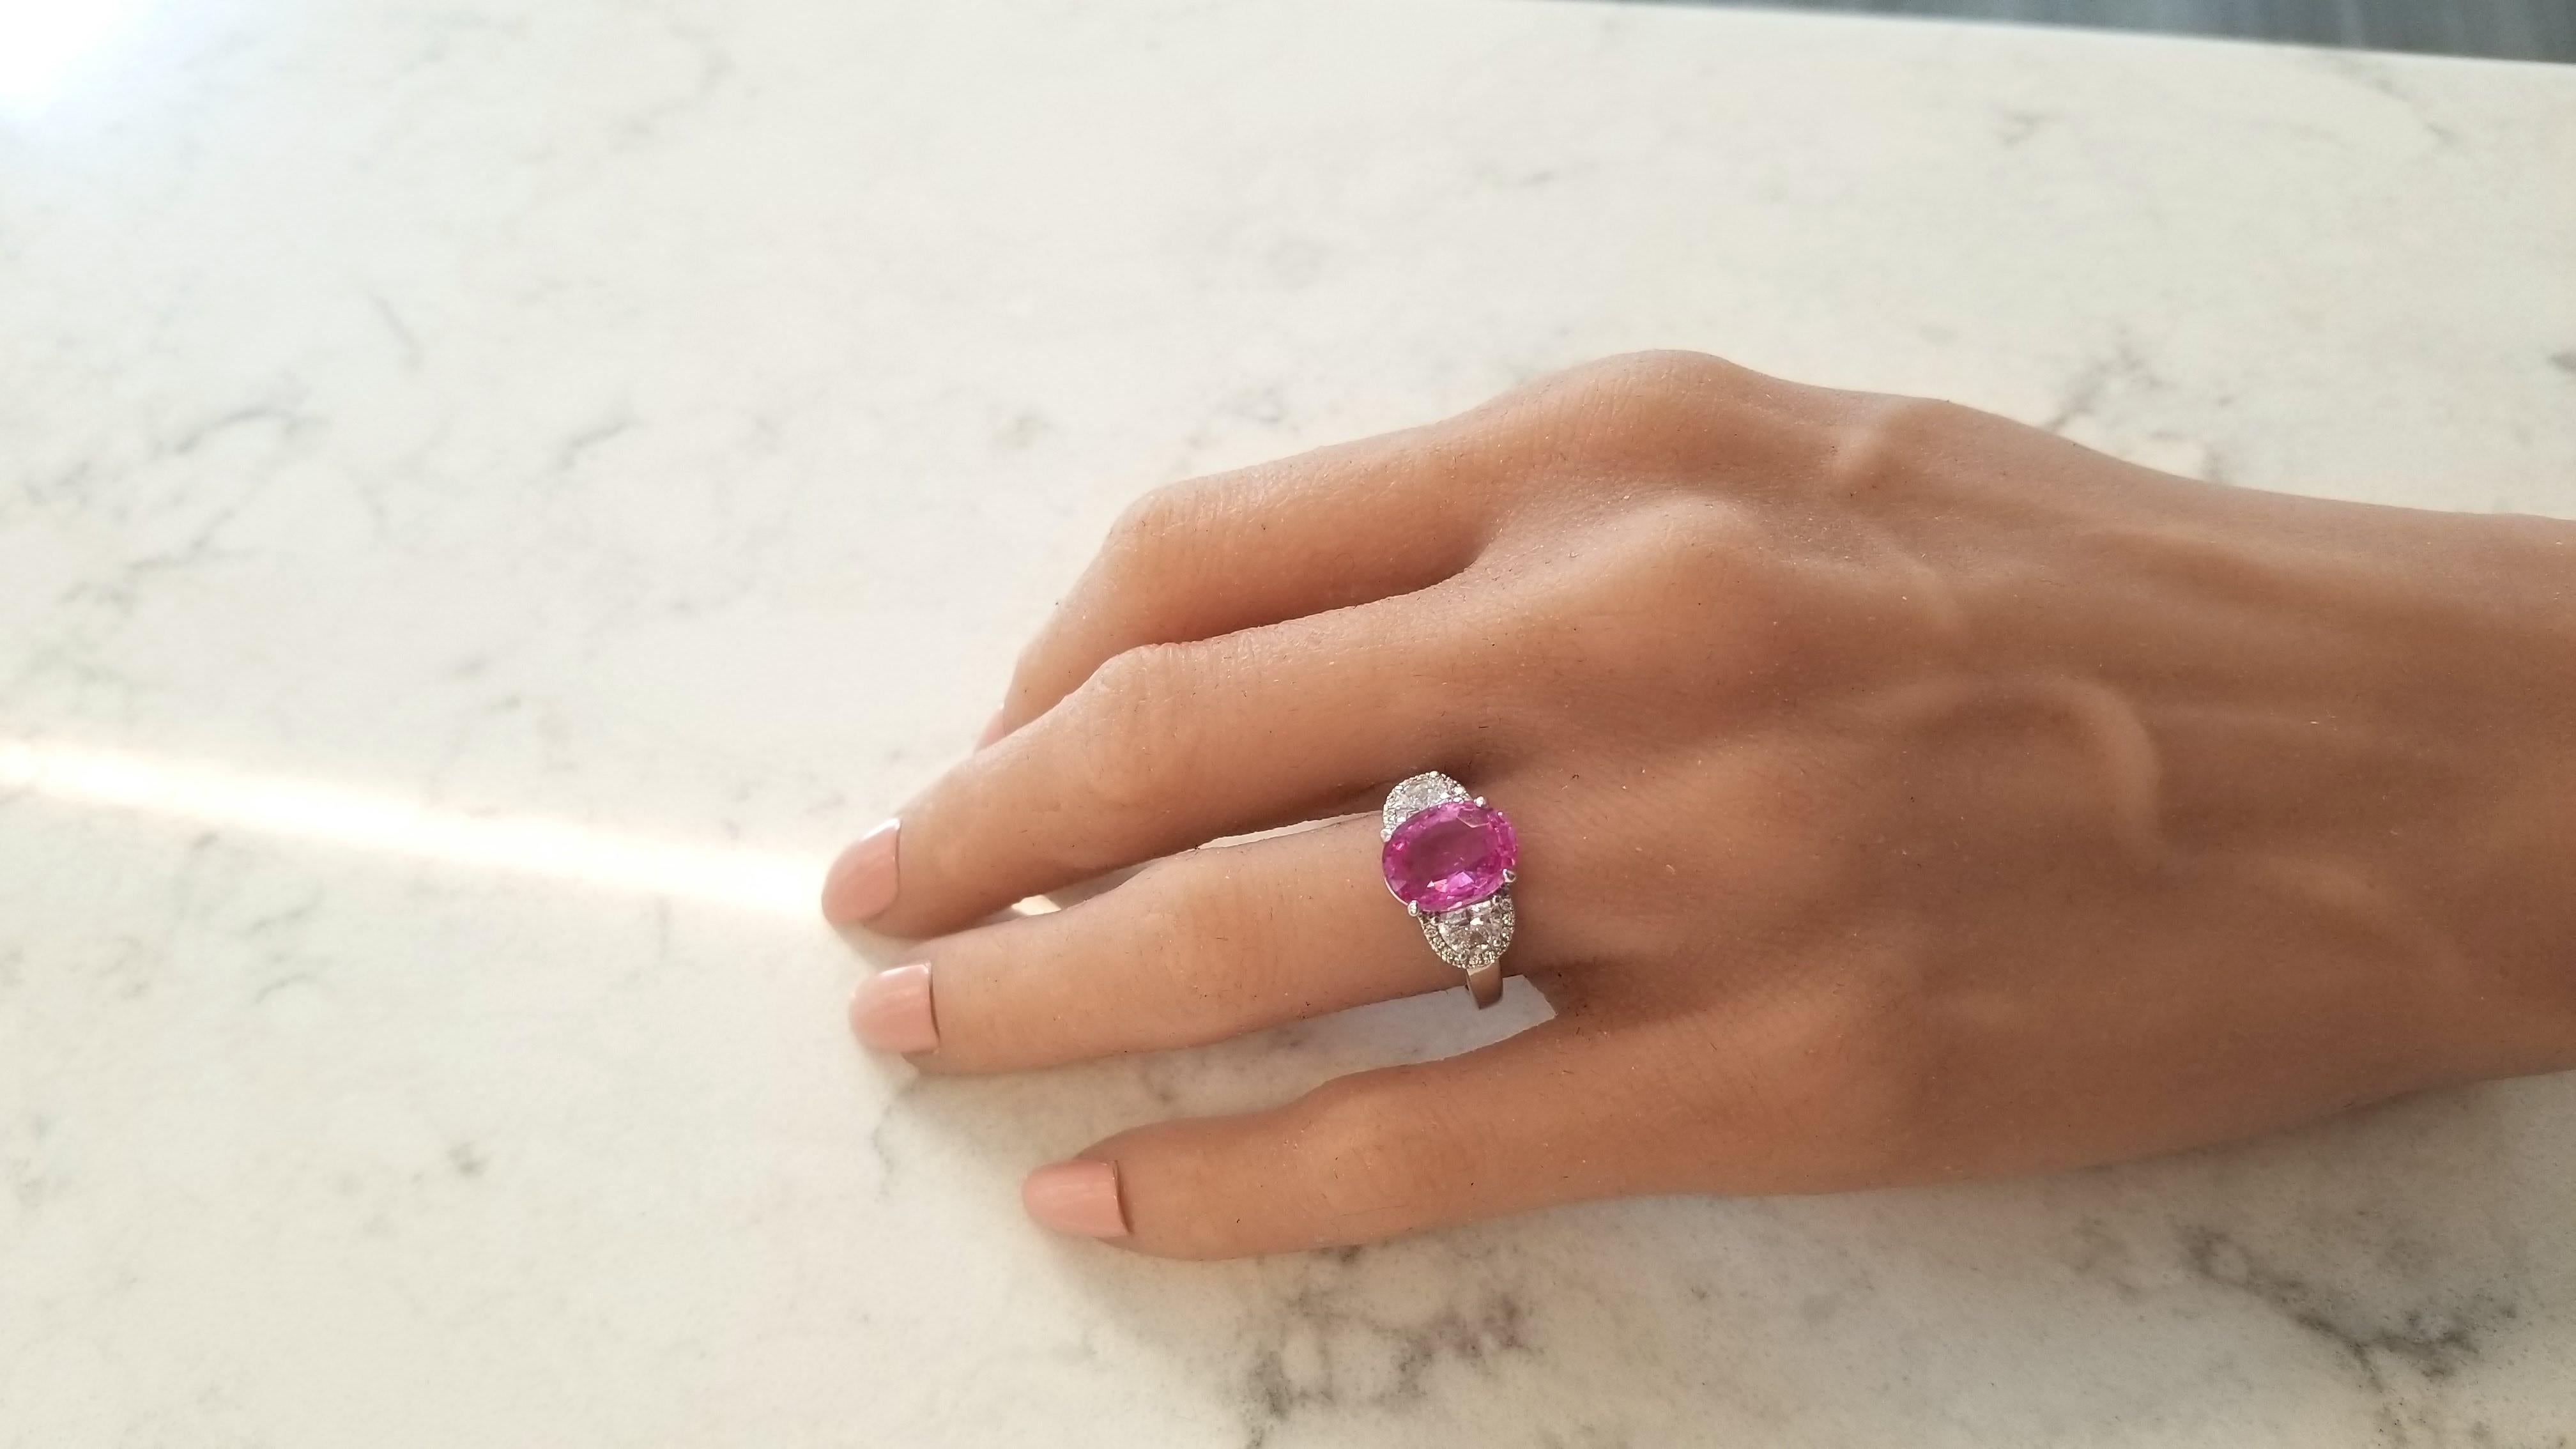 Women's Emteem Certified 3.75 Carat Oval Pink Sapphire & Diamond Cocktail Ring In 18K